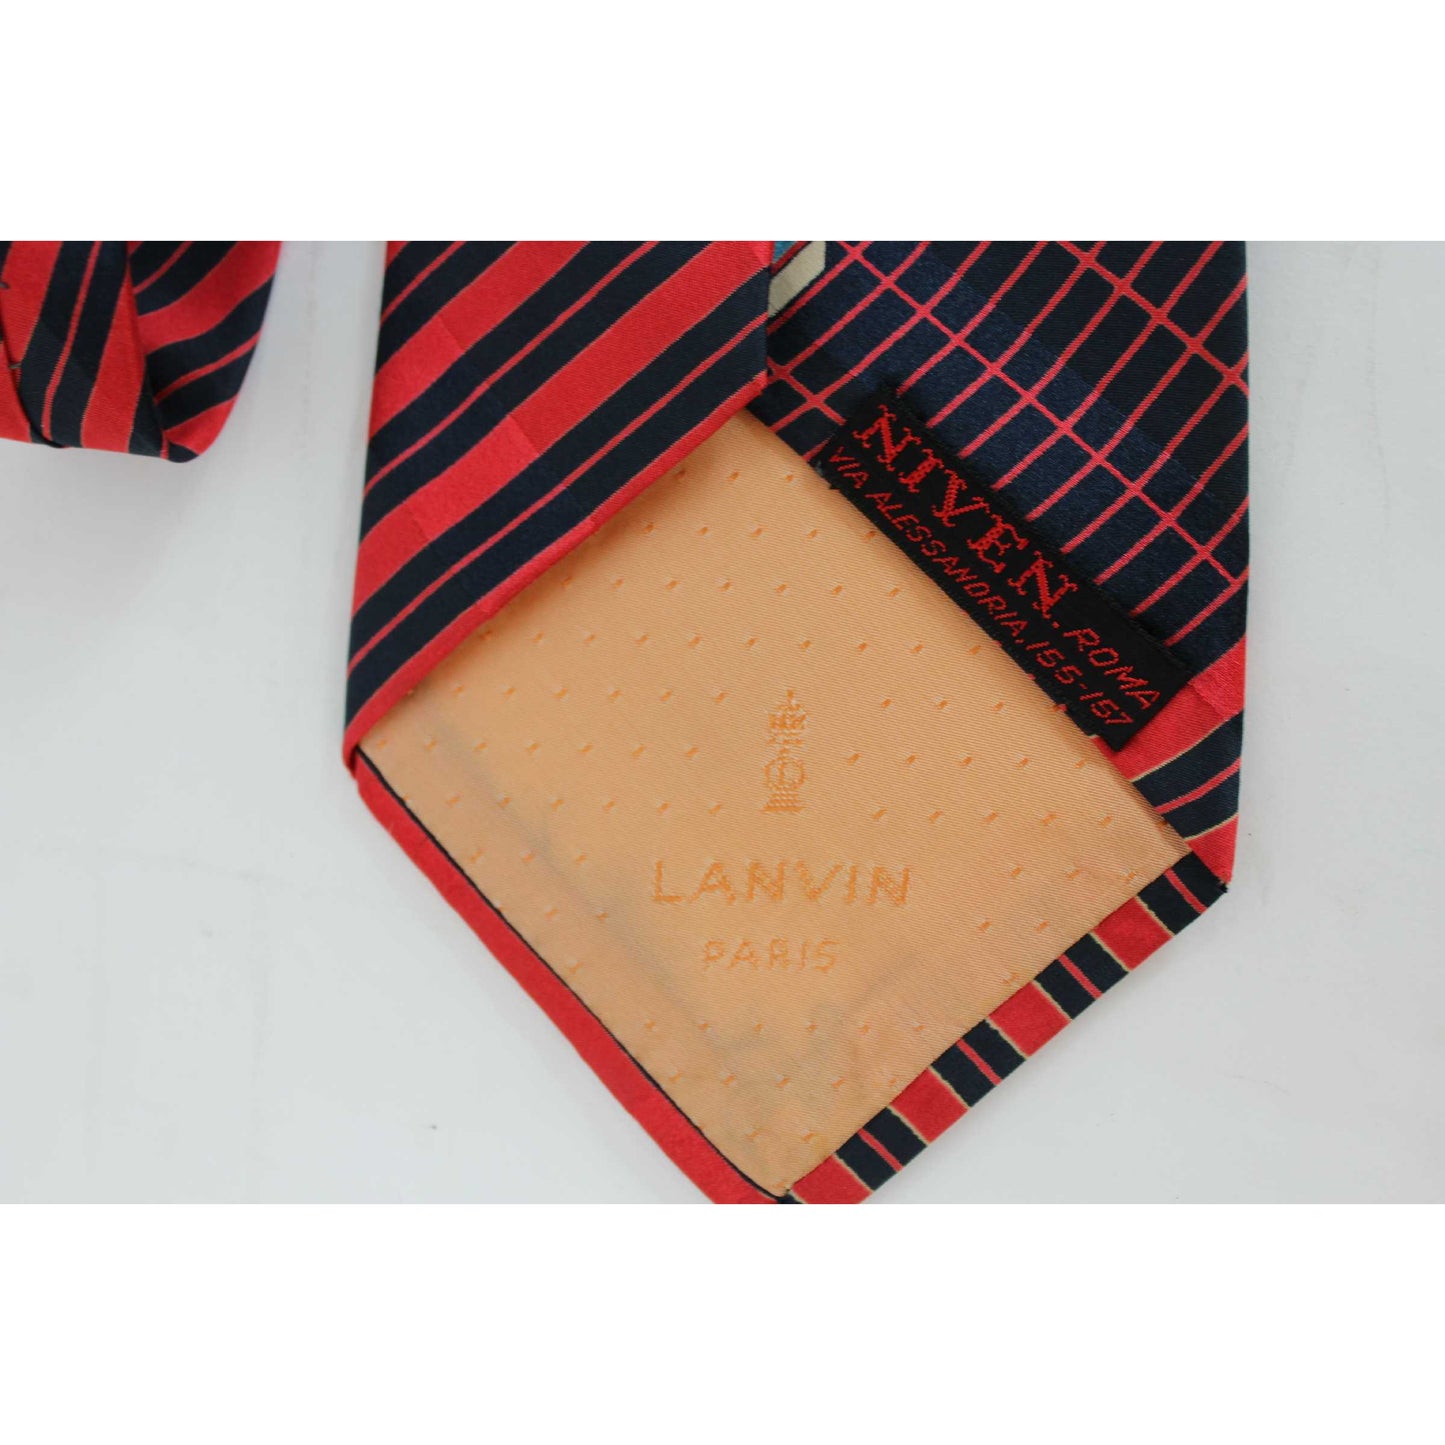 Lanvin Cravatta Seta Regimentale Righe Vintage Blu Rossa